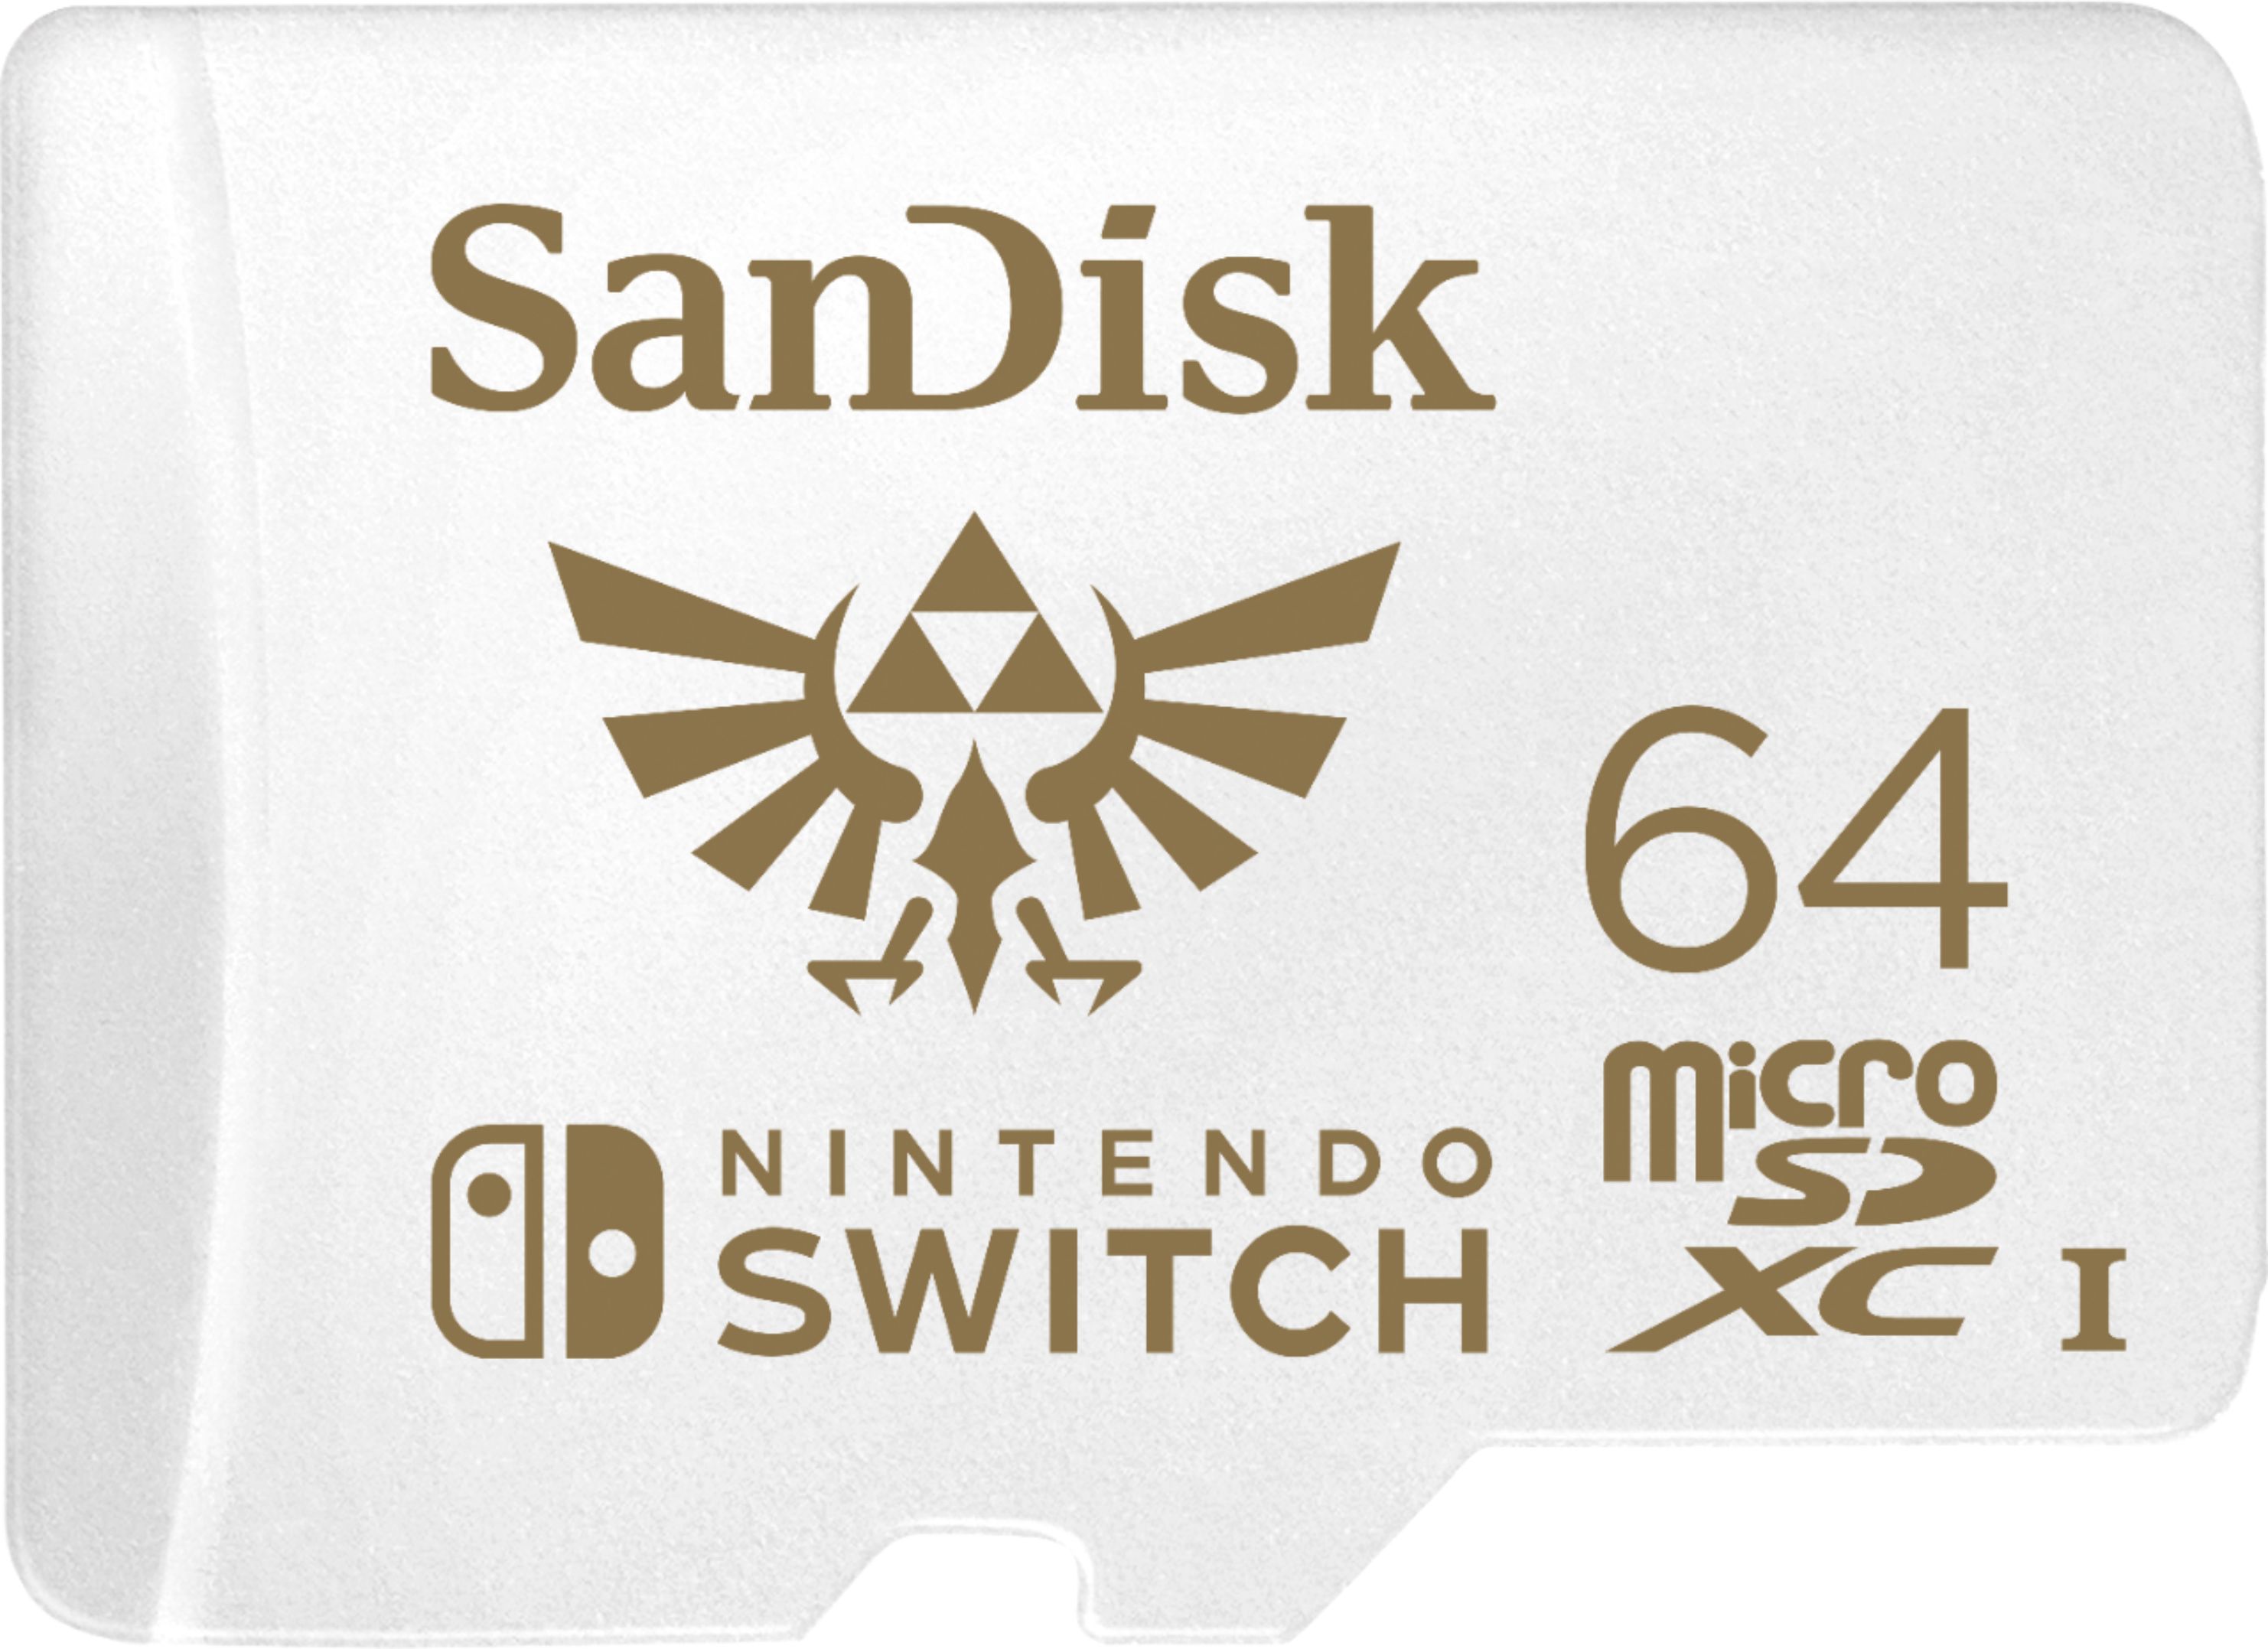 SanDisk - 64GB microSDXC Memory Card for Nintendo Switch